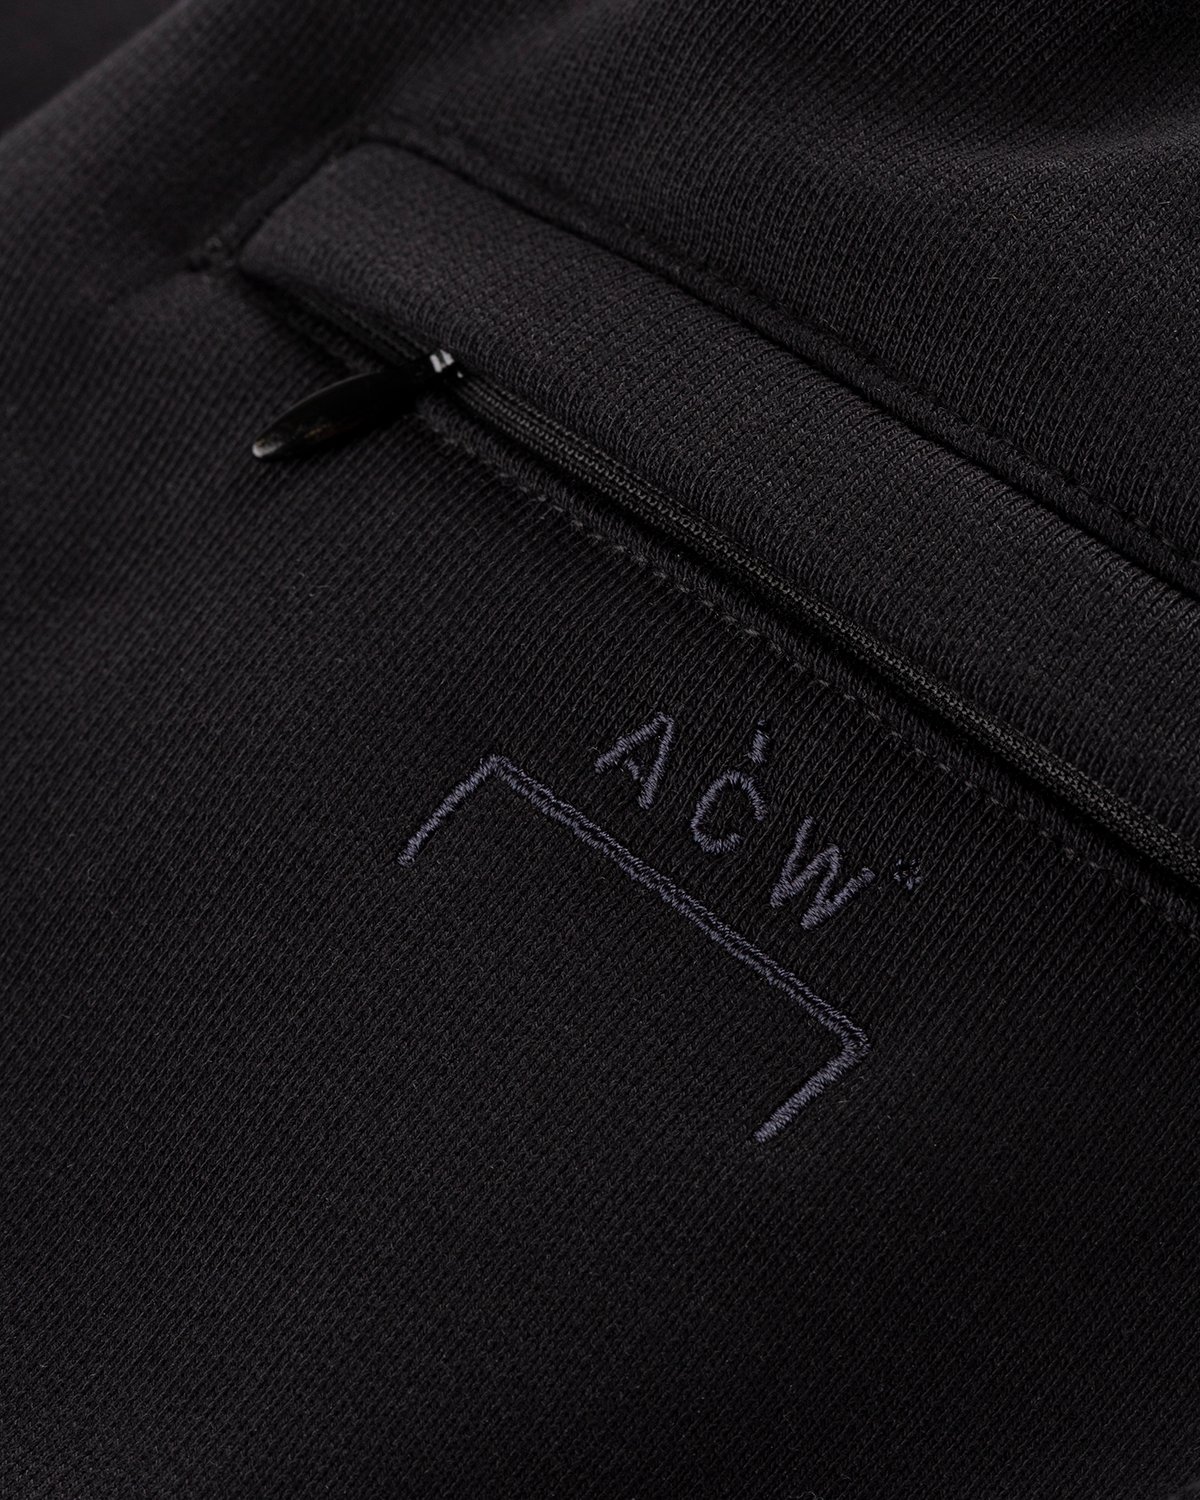 A-Cold-Wall* - Vault Shorts Black - Clothing - Black - Image 6